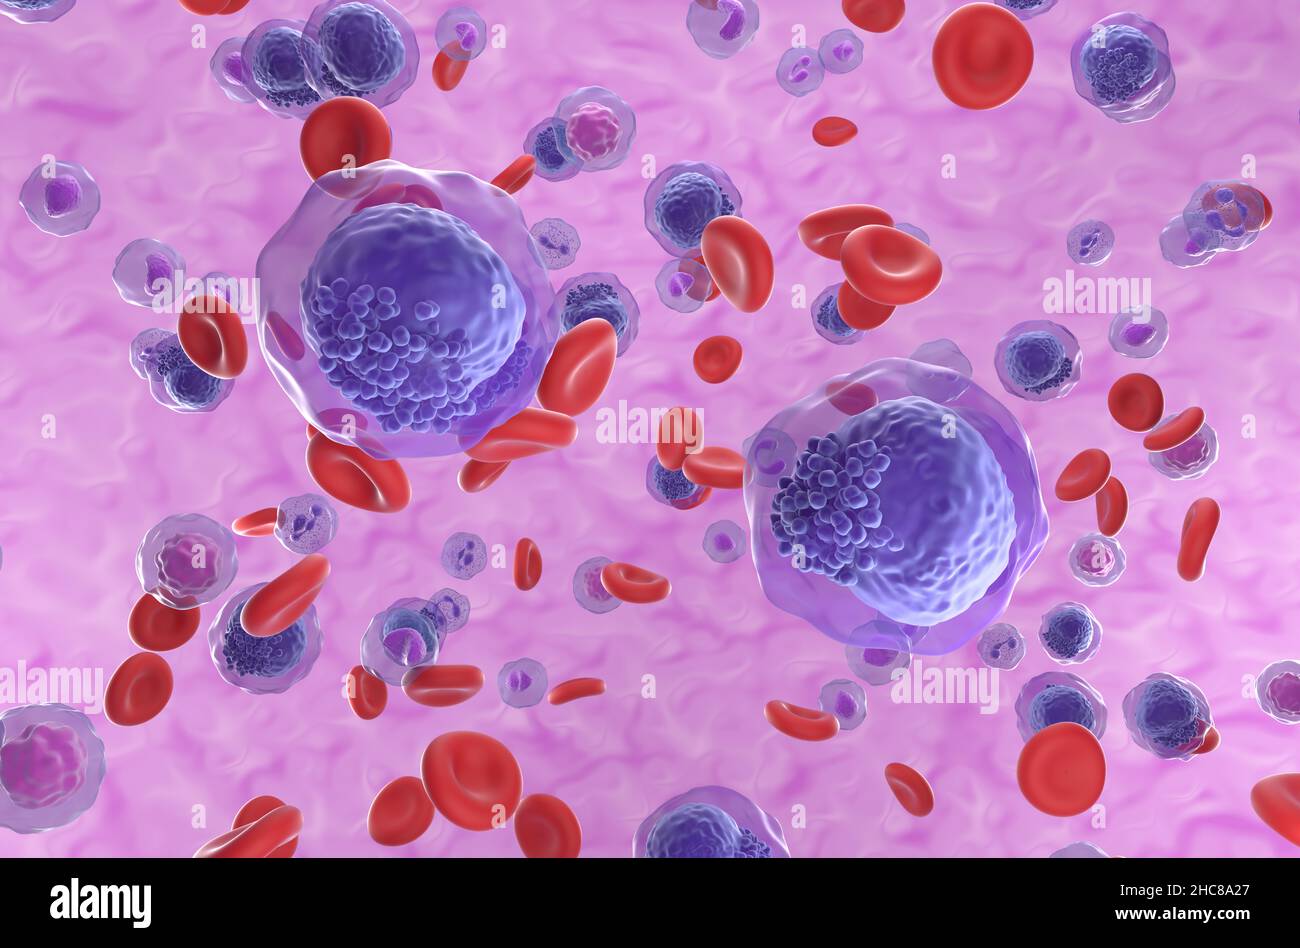 Acute myeloid leukemia (AML) cells in blood flow - isometric view 3d illustration Stock Photo